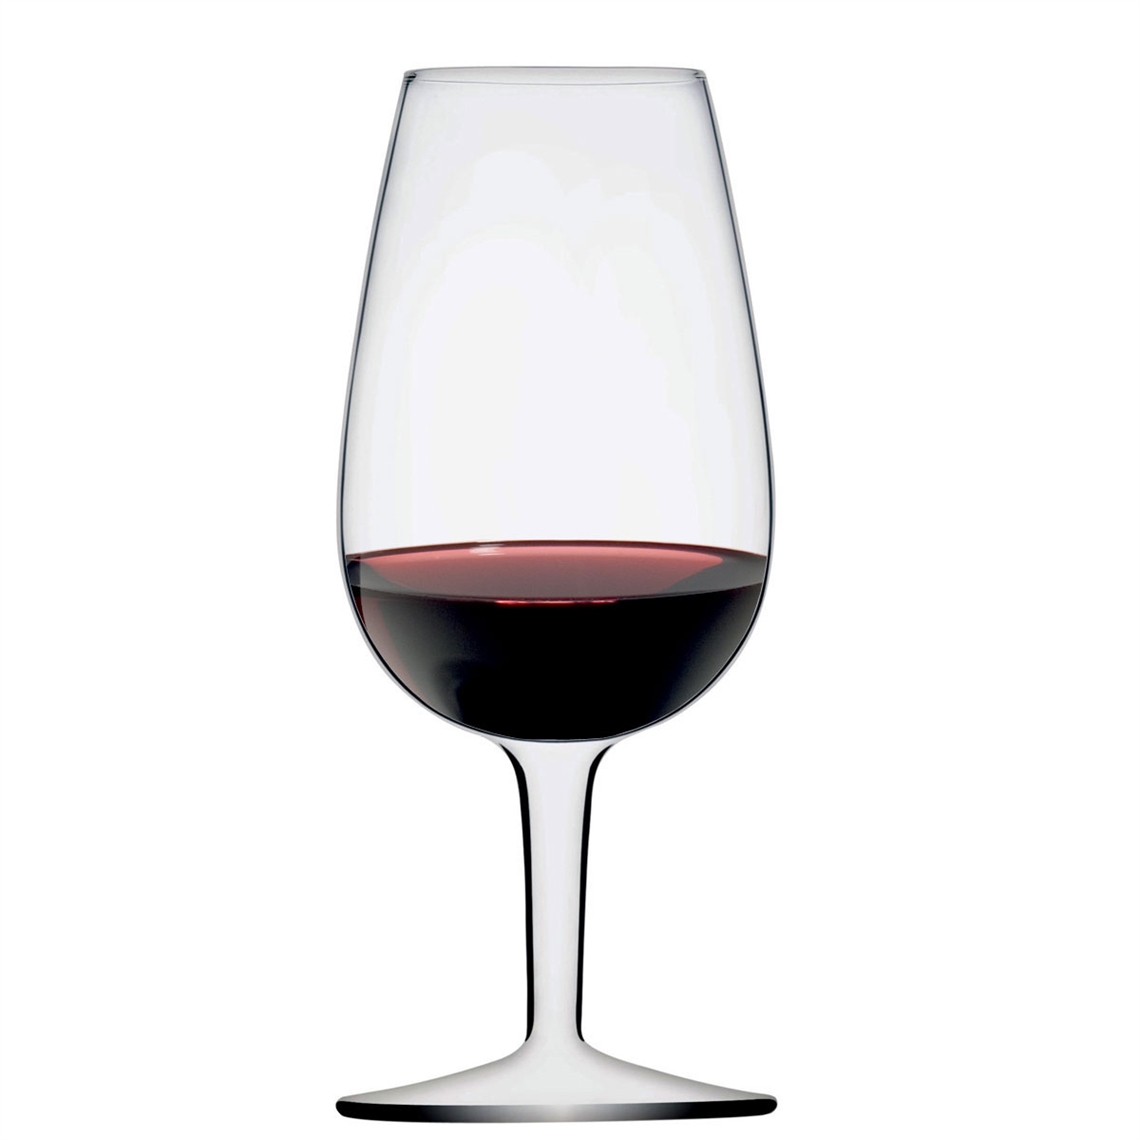 View more restaurant glasses - riedel from our Wine Tasting Glasses range